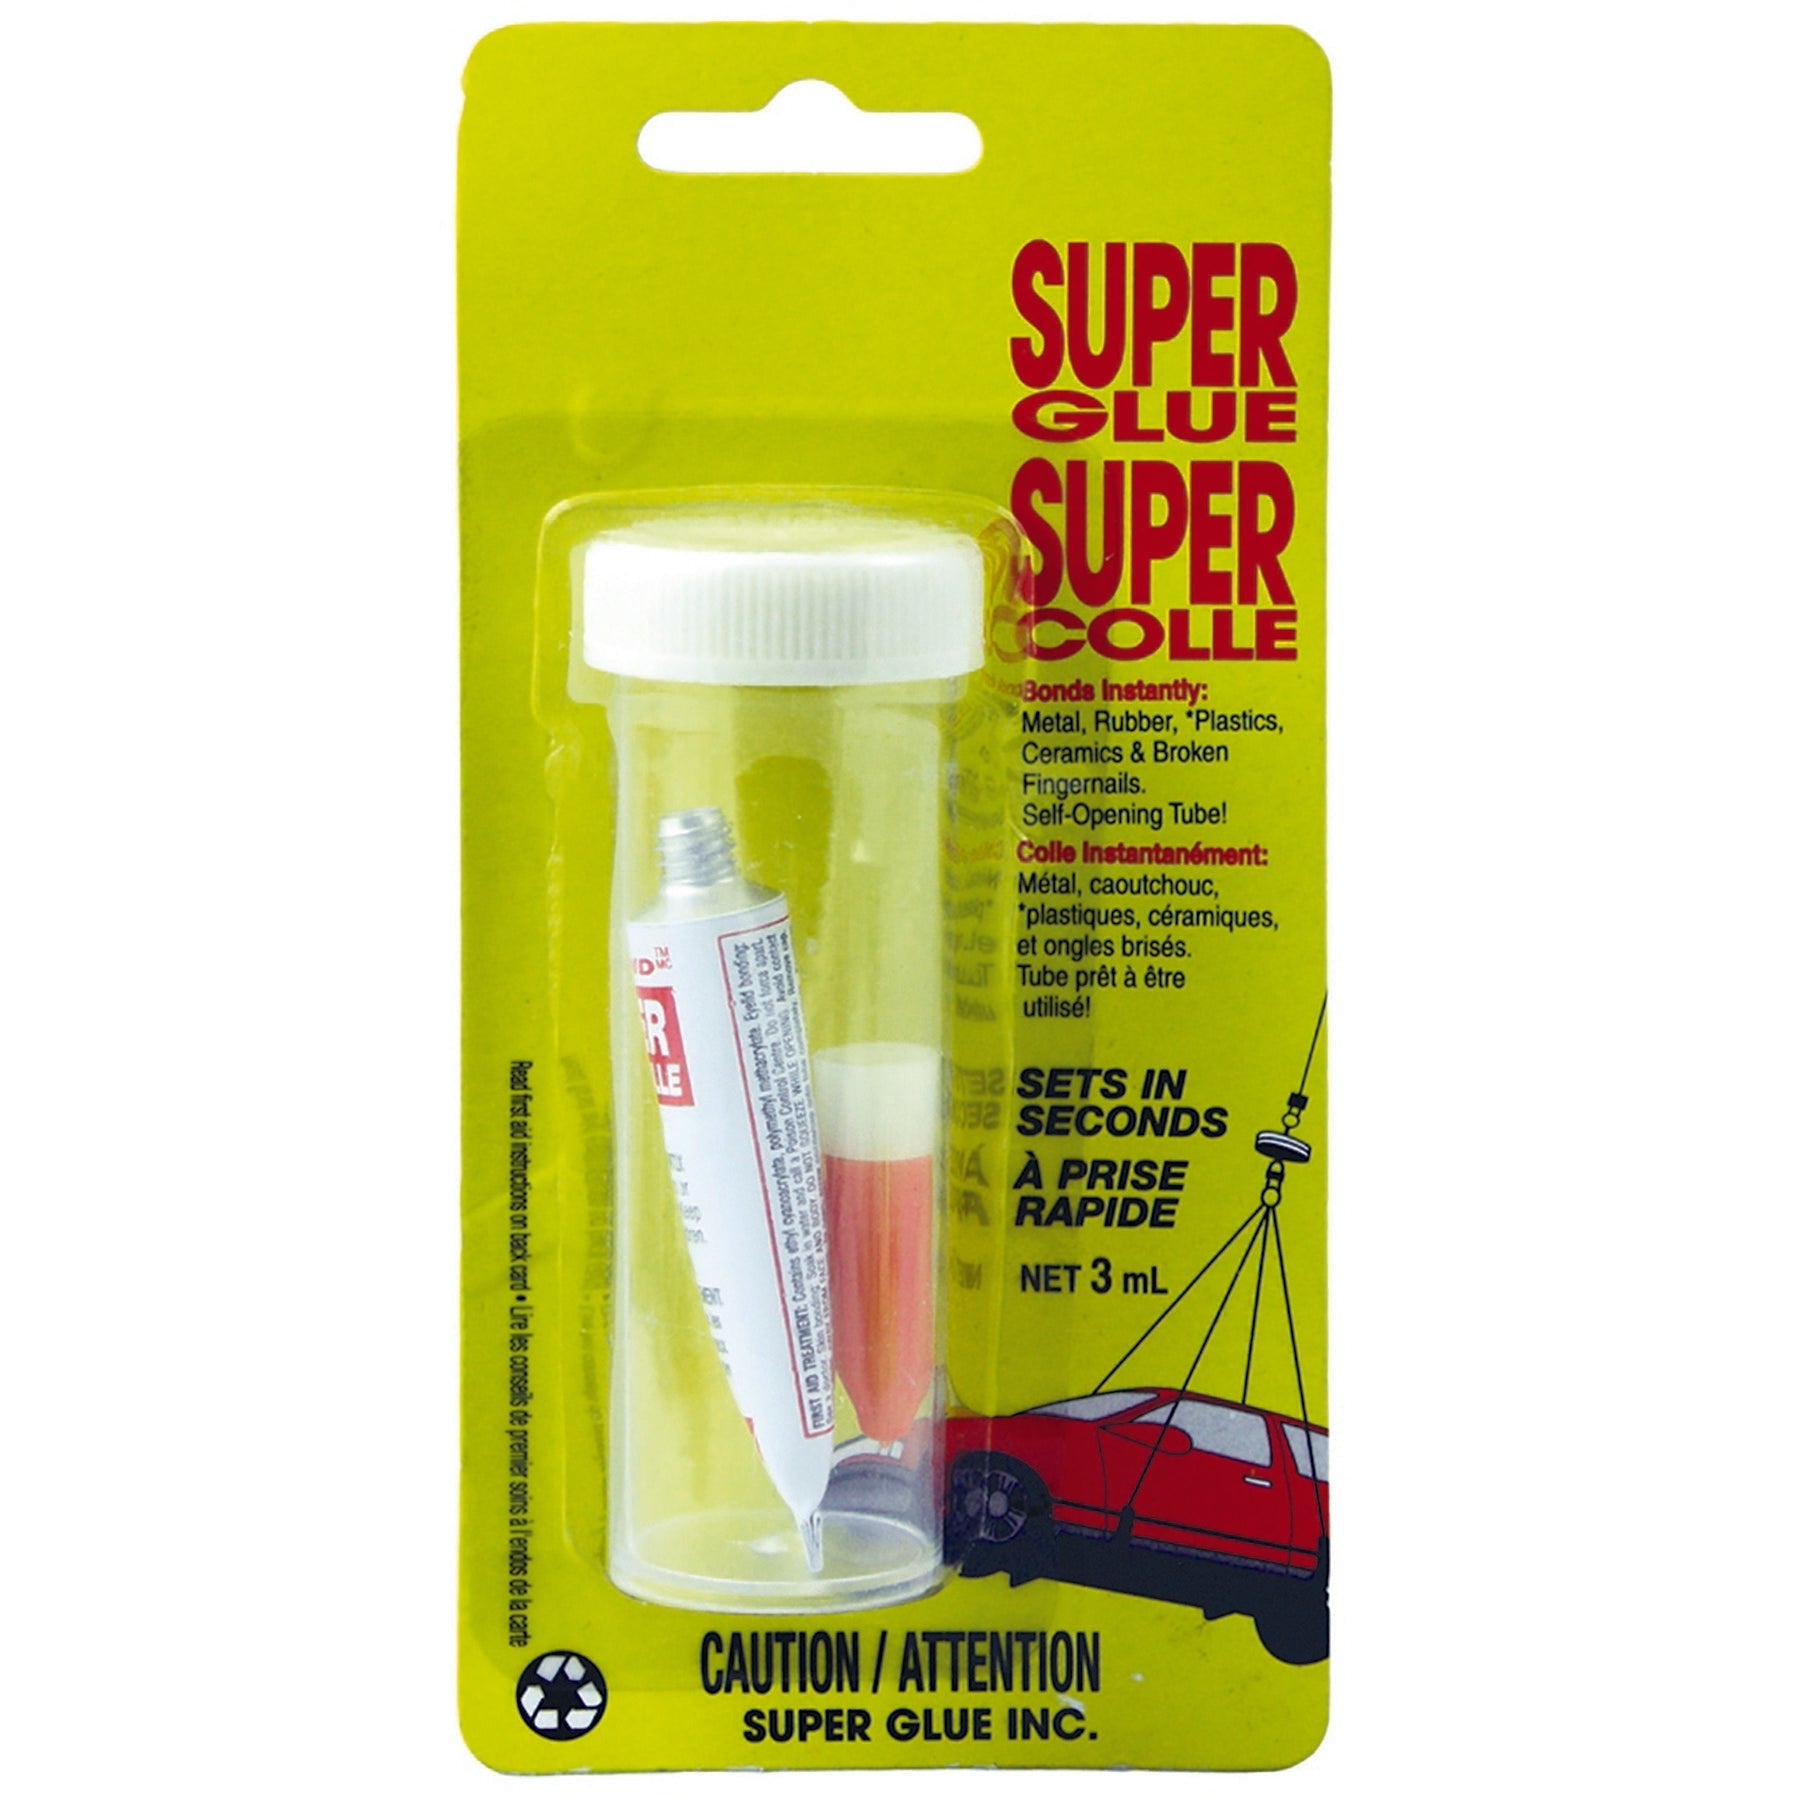 Viachem Super Glue 0.1oz